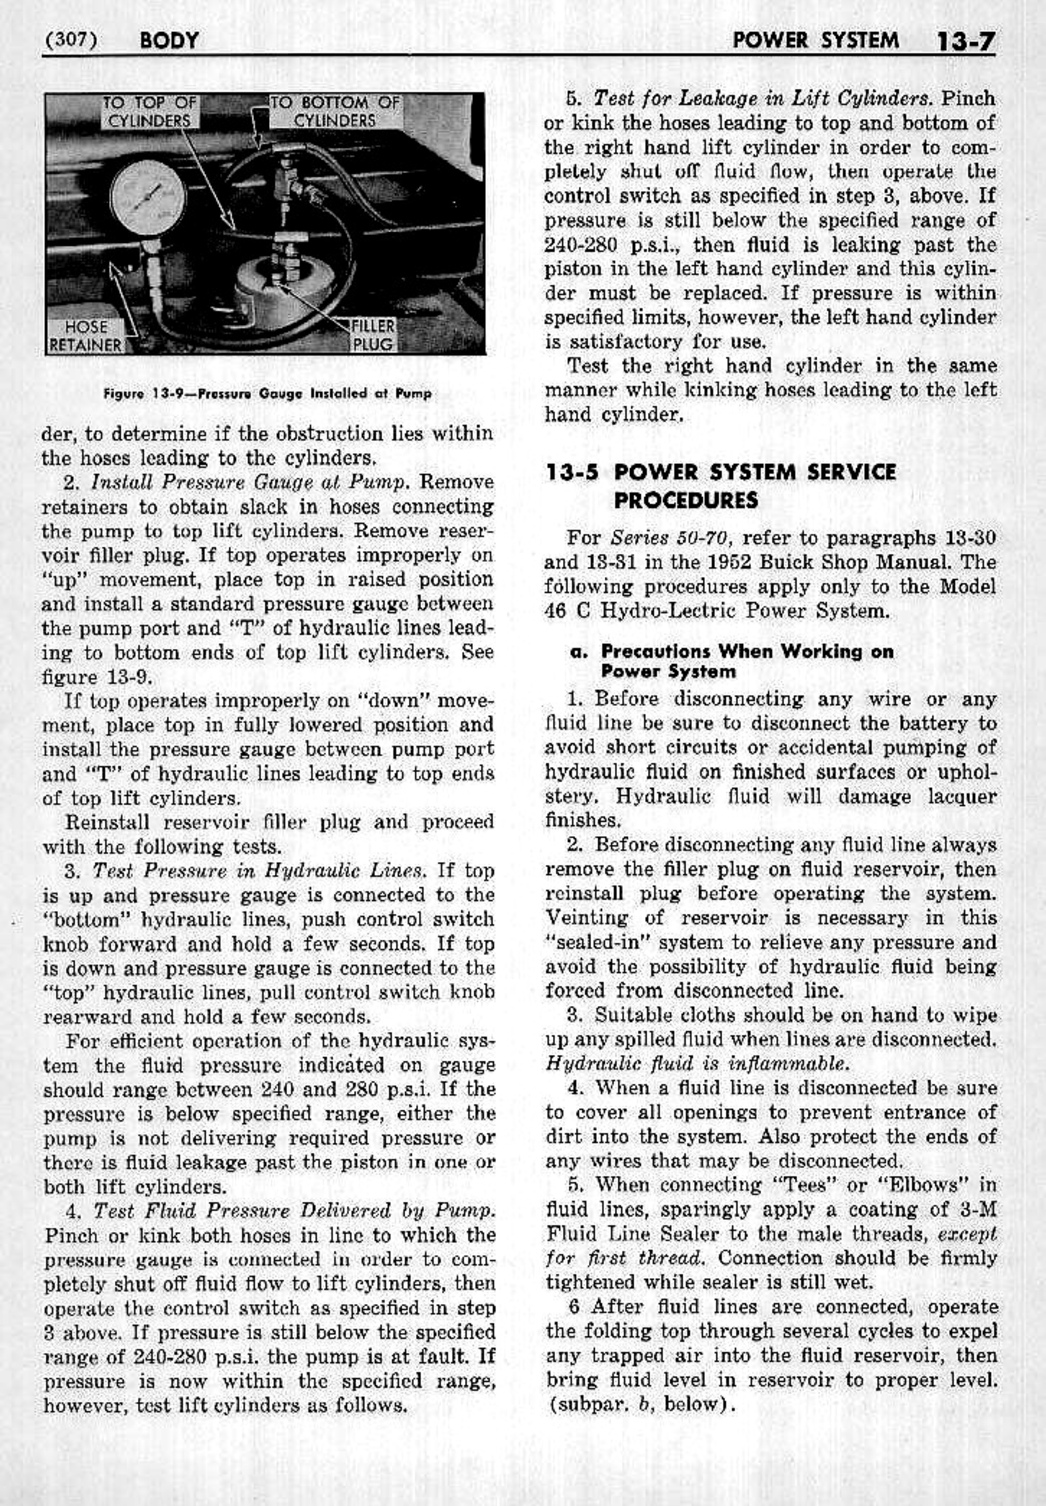 n_14 1953 Buick Shop Manual - Body-007-007.jpg